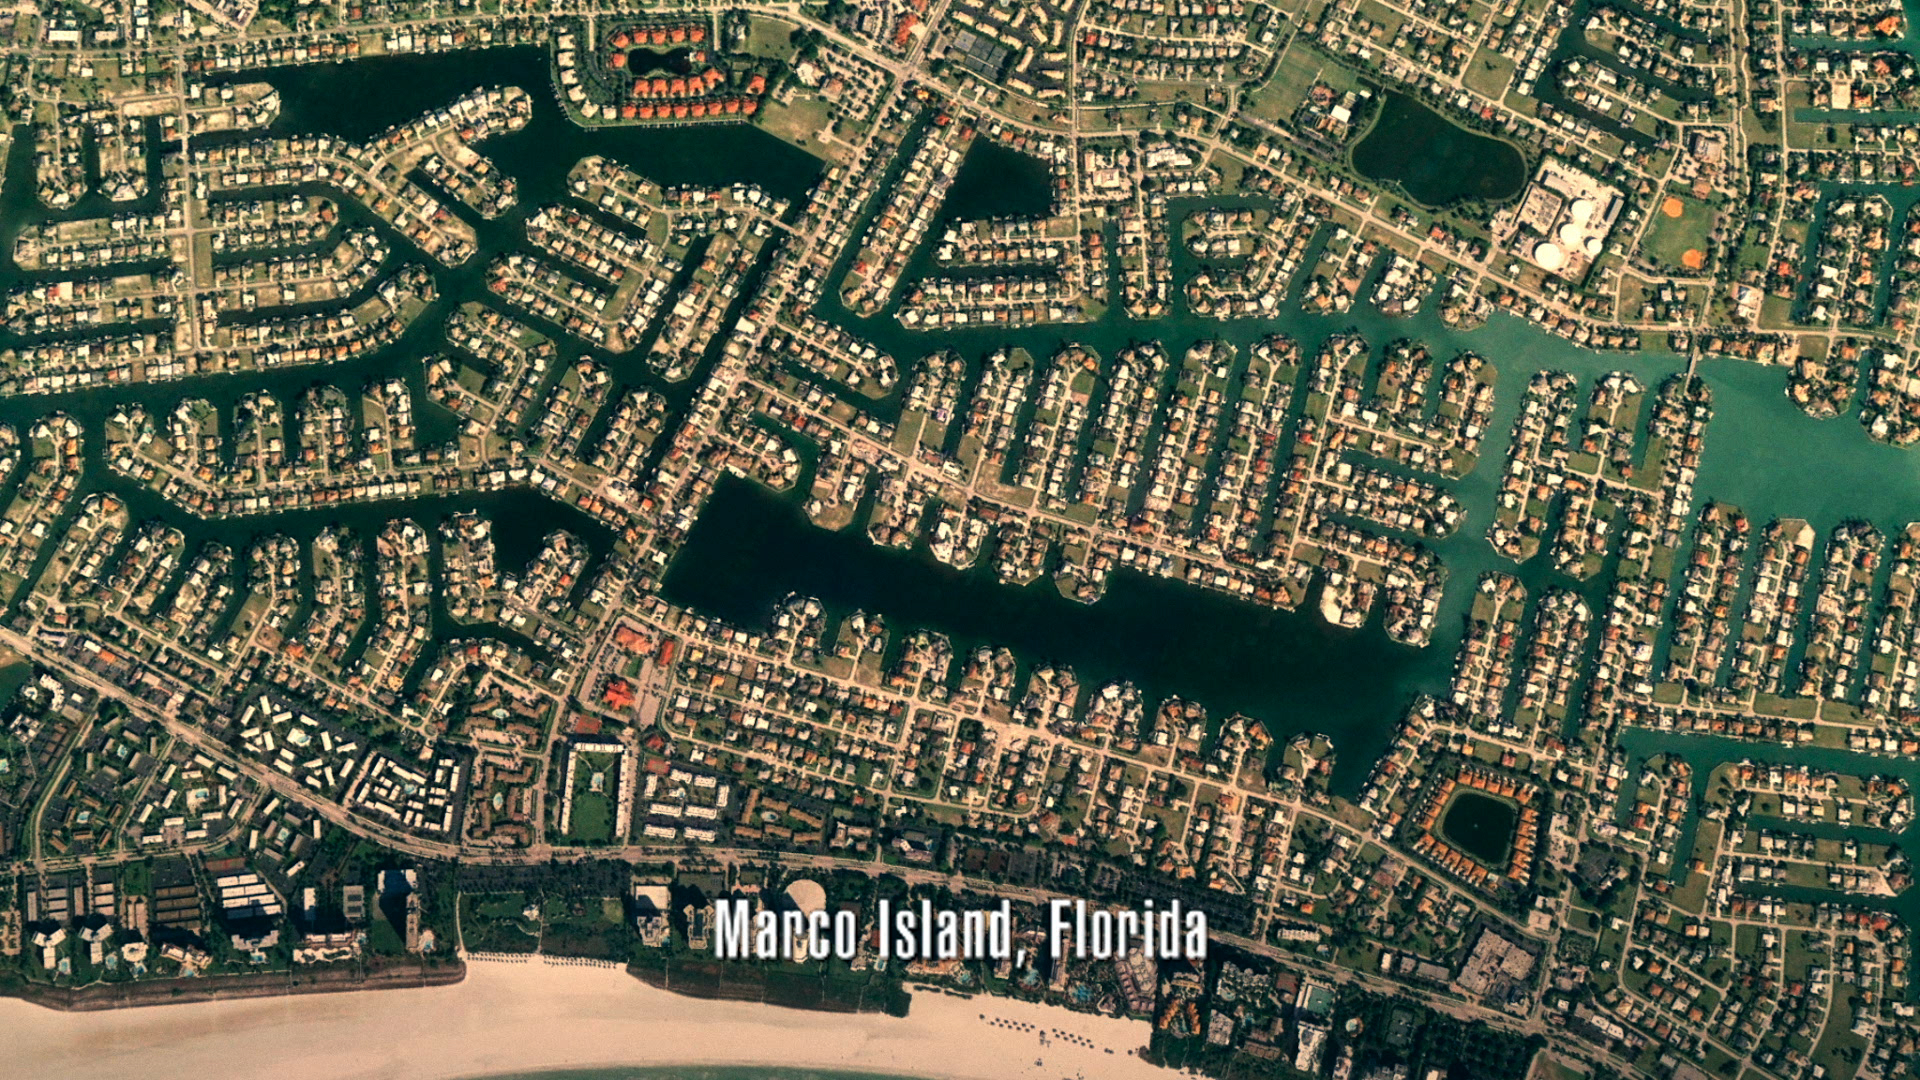 Google Earth imagery of Marco Island Florida